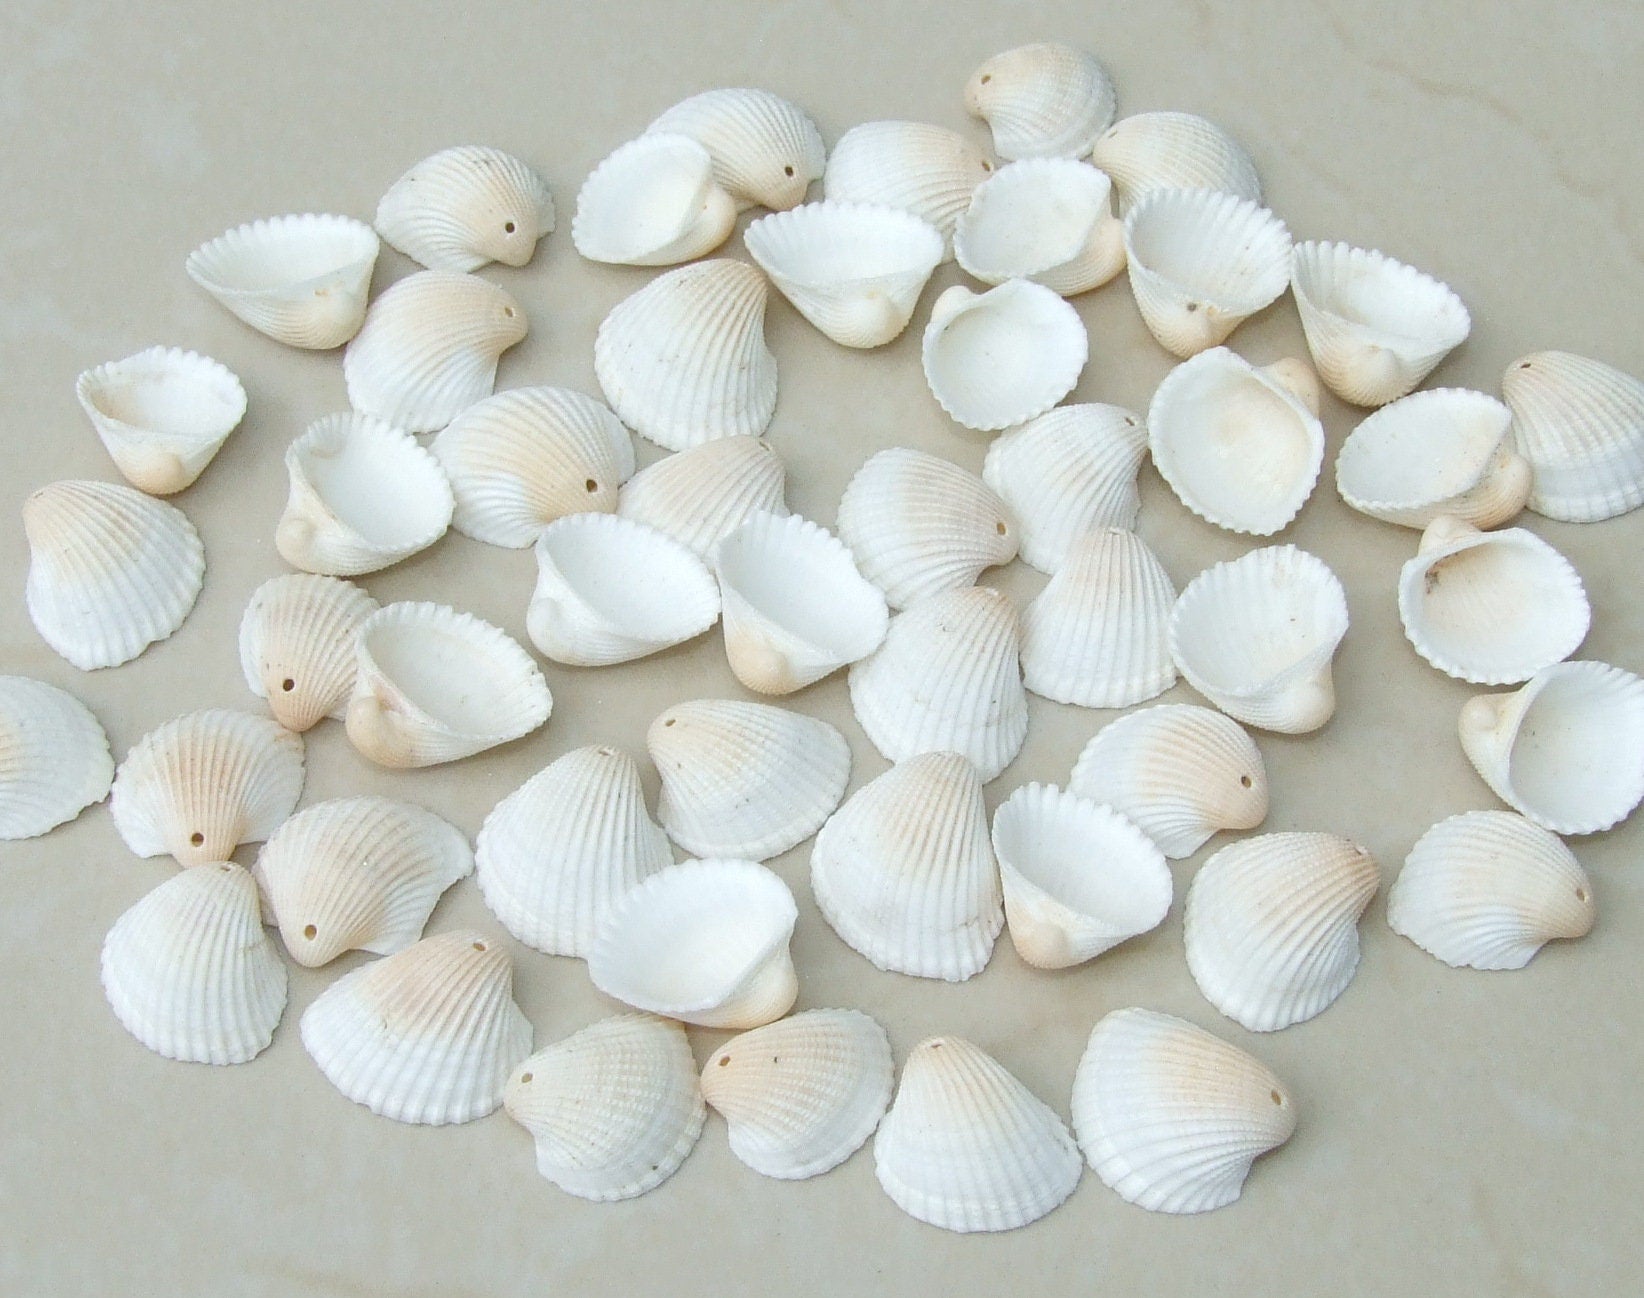 20 Natural Clam Sea Shell, Sea Shell Bead, Seashell, Ark Shell, Ribbed, Dinocardium Robustum, Shell Jewelry, Beach, Ocean, 20 Shells, 51-14